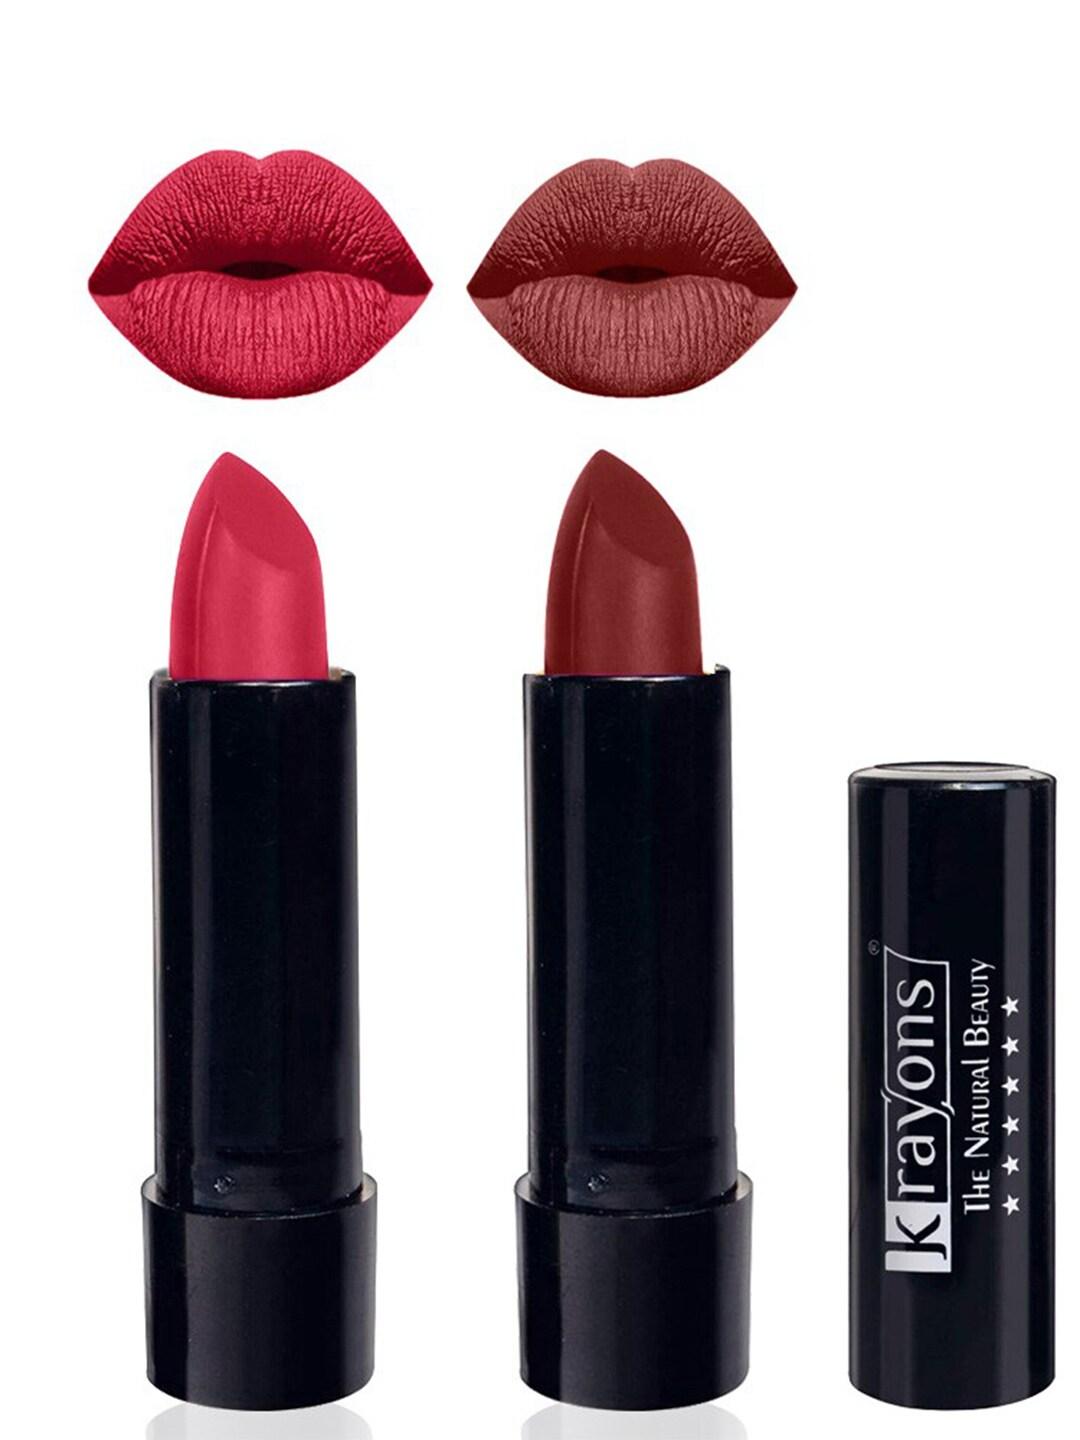 krayons The Natural Beauty Set Of 2 Matte Lipsticks - First Crush 160 & Cherry Maroon 195